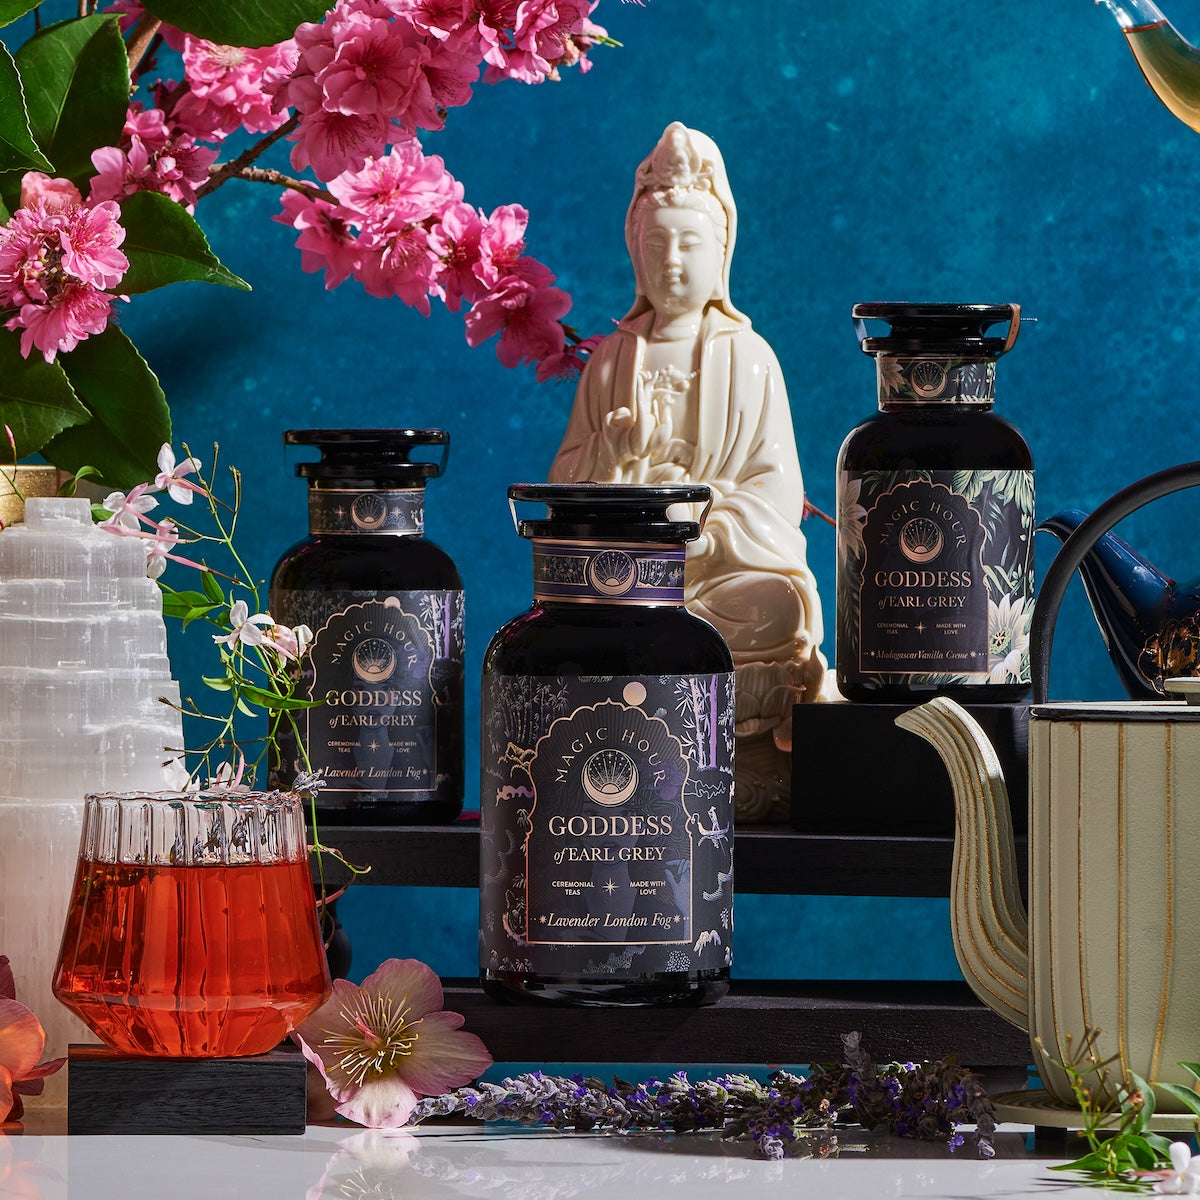 Goddess of Earl: Lavender London Fog- Tea for Blooming Clarity &amp; Calm Moods